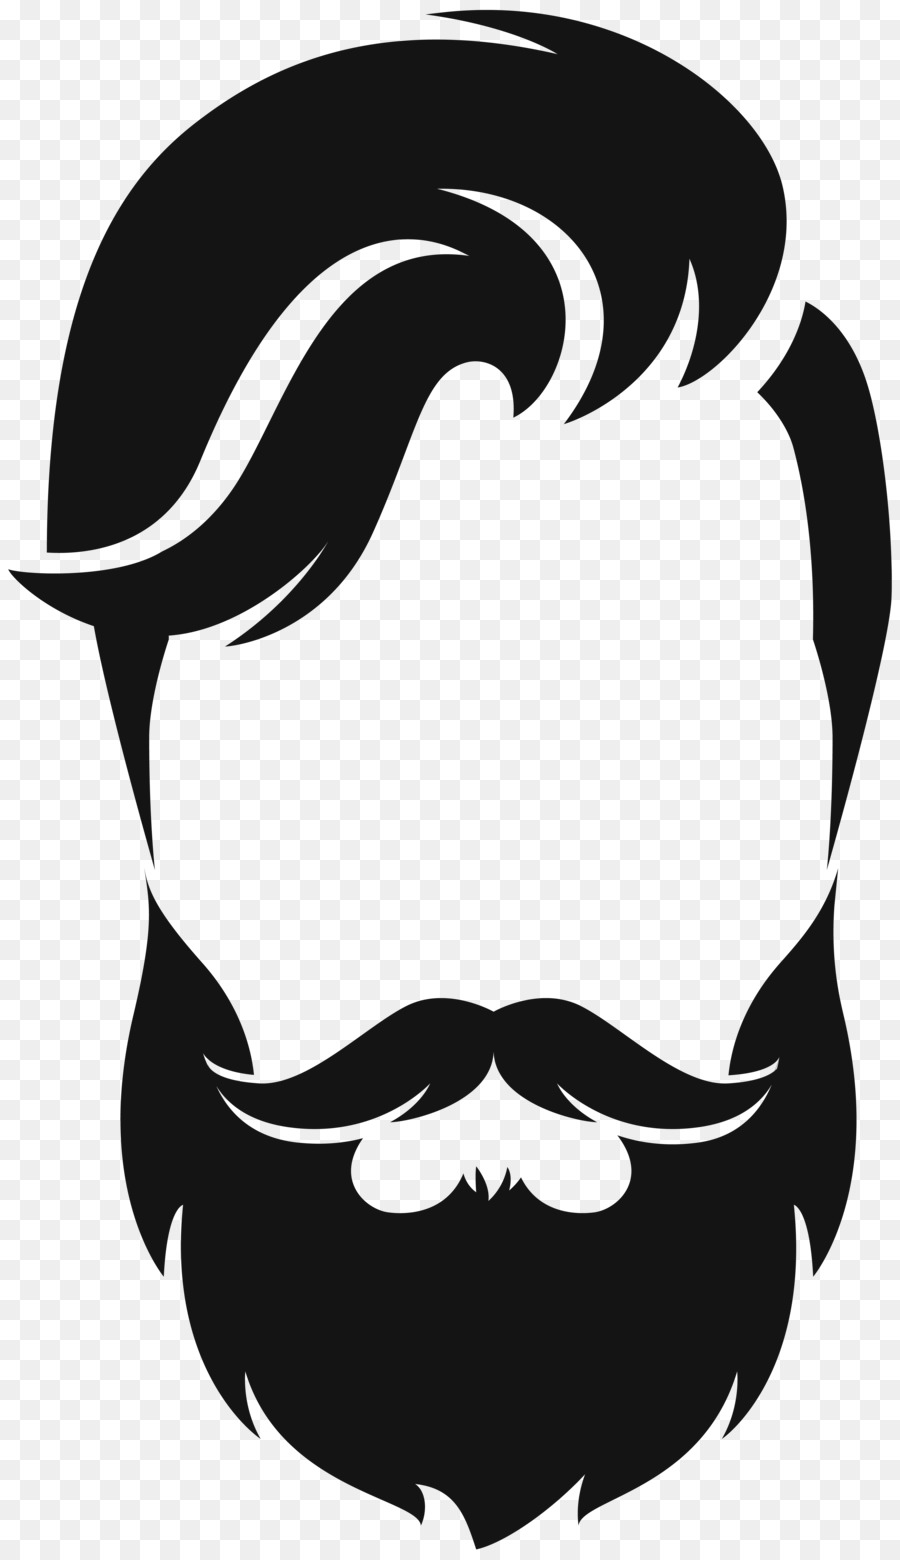 Silhouette Beard Moustache Clip art - hair style